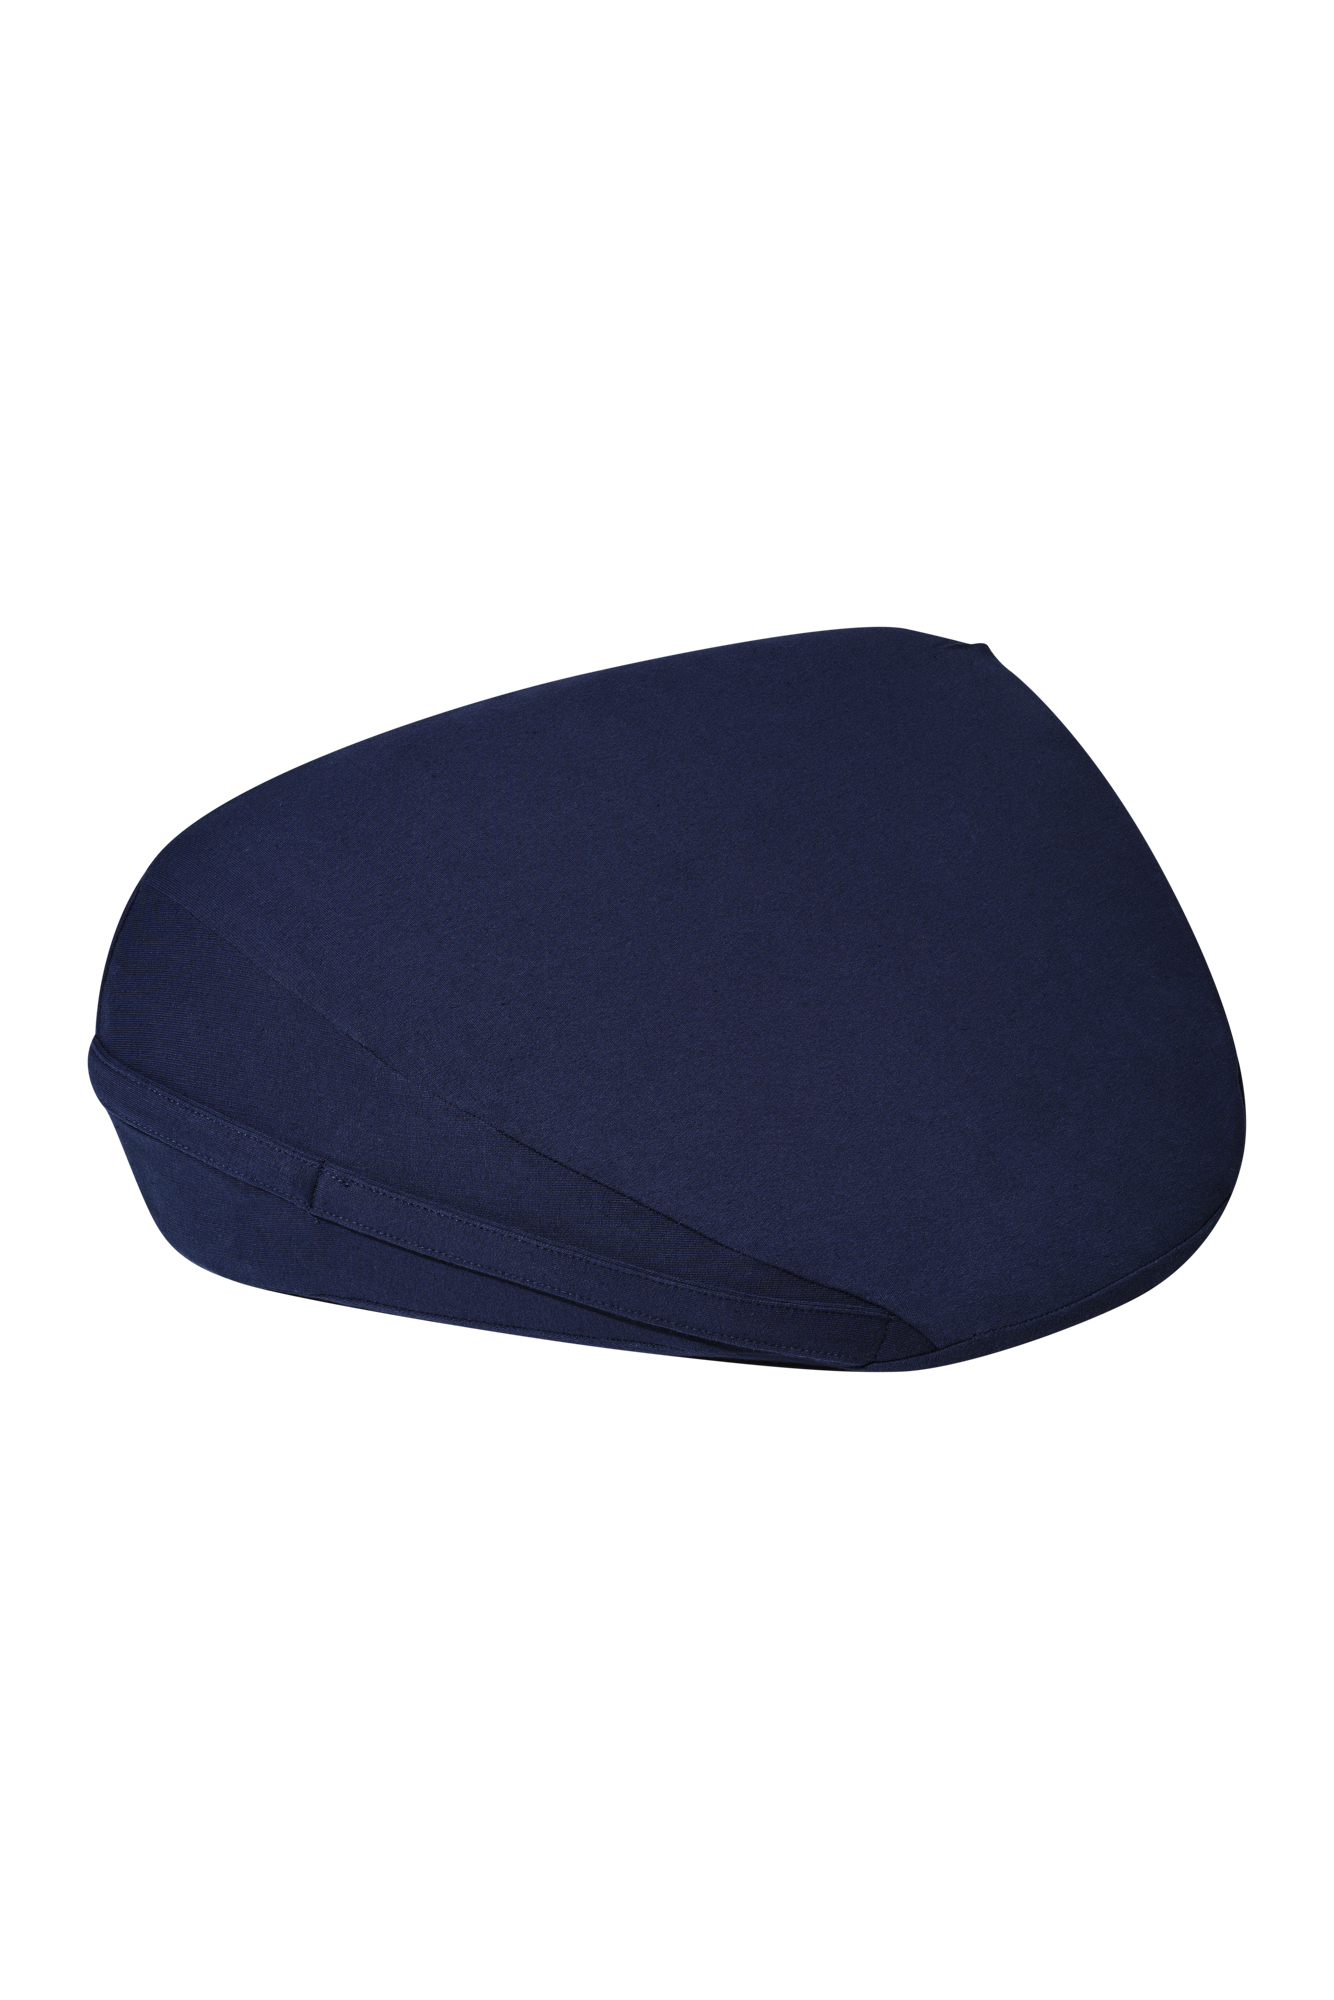 Indigo | Seamless | An indigo-blue pillow, roughly square pyramid shaped, on beige background.